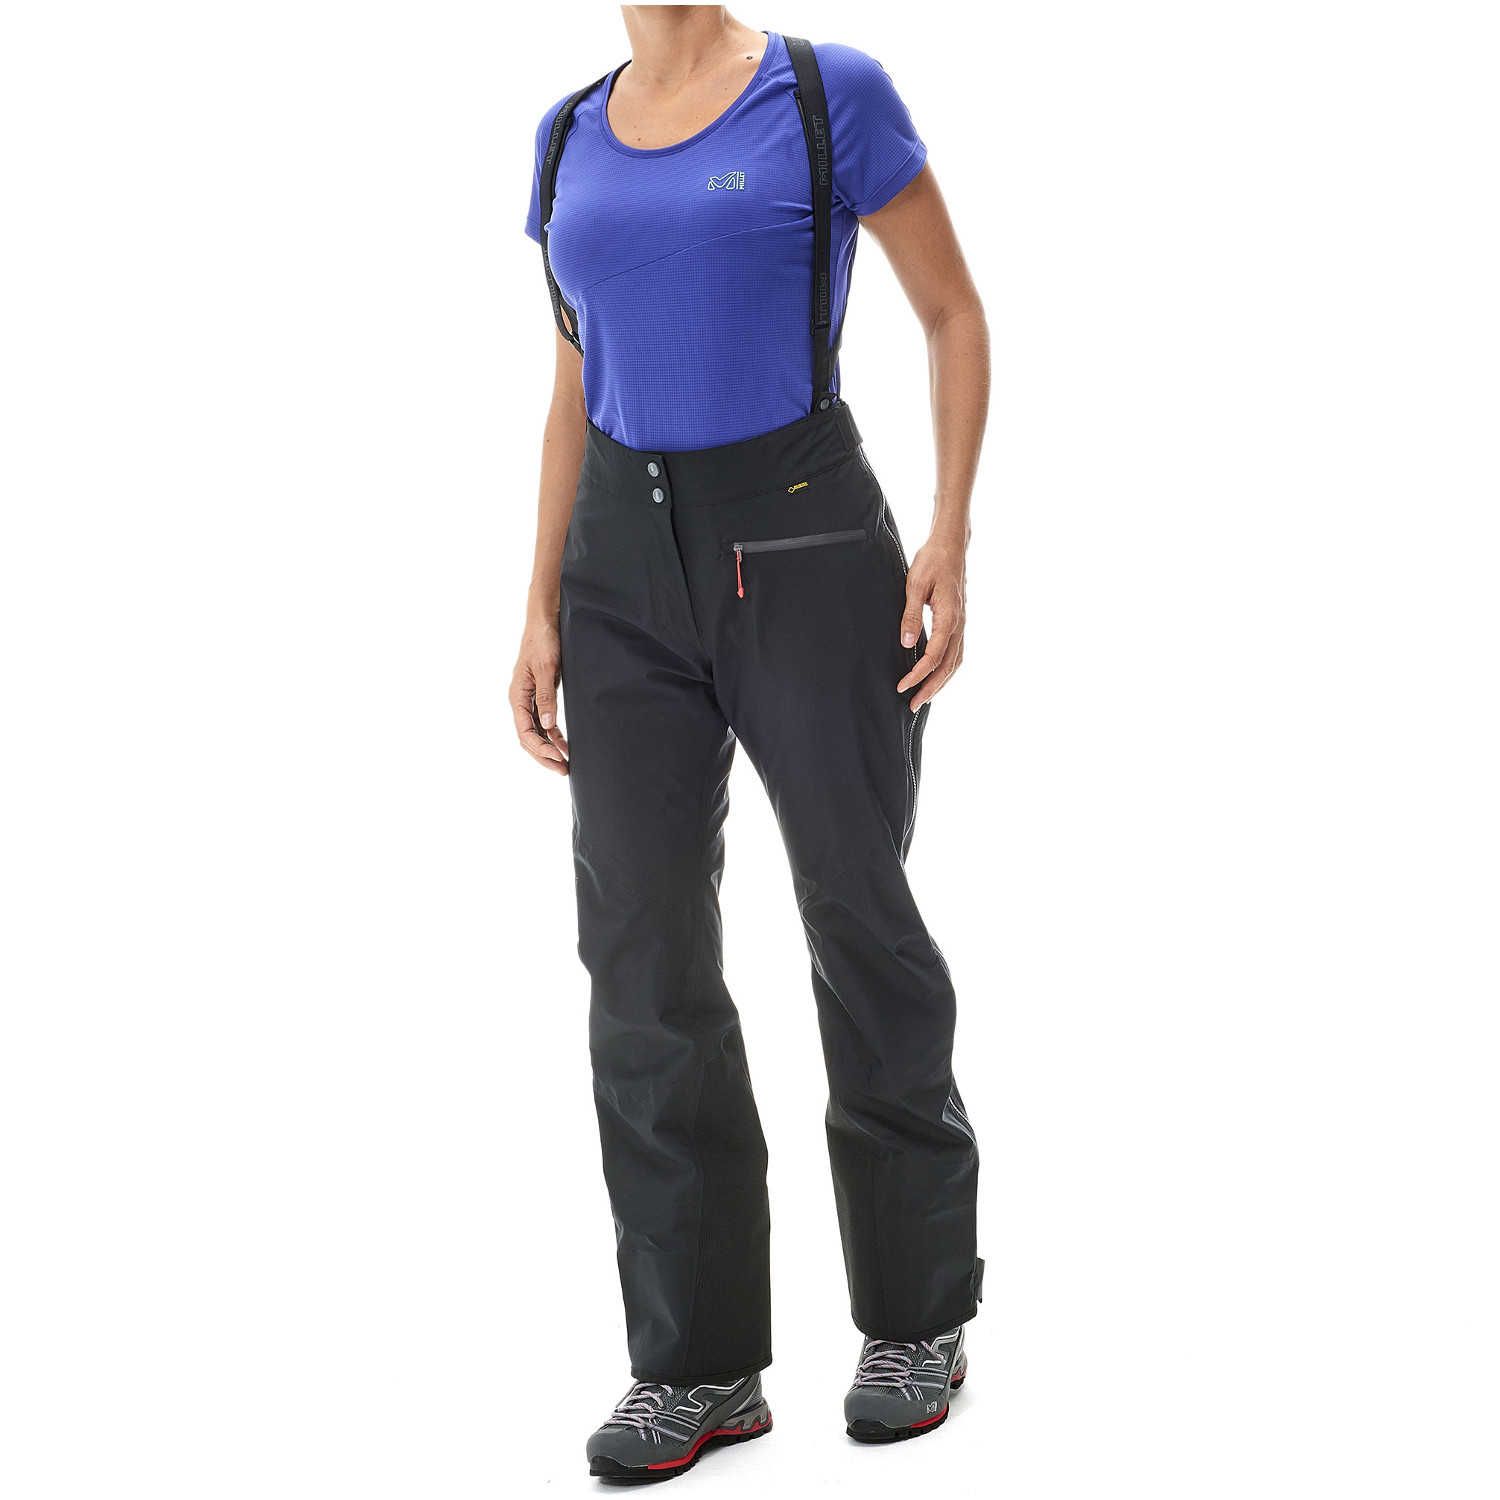 Pantalon d'Alpinisme Femme LD Kamet 2 GTX Pant - Noir 